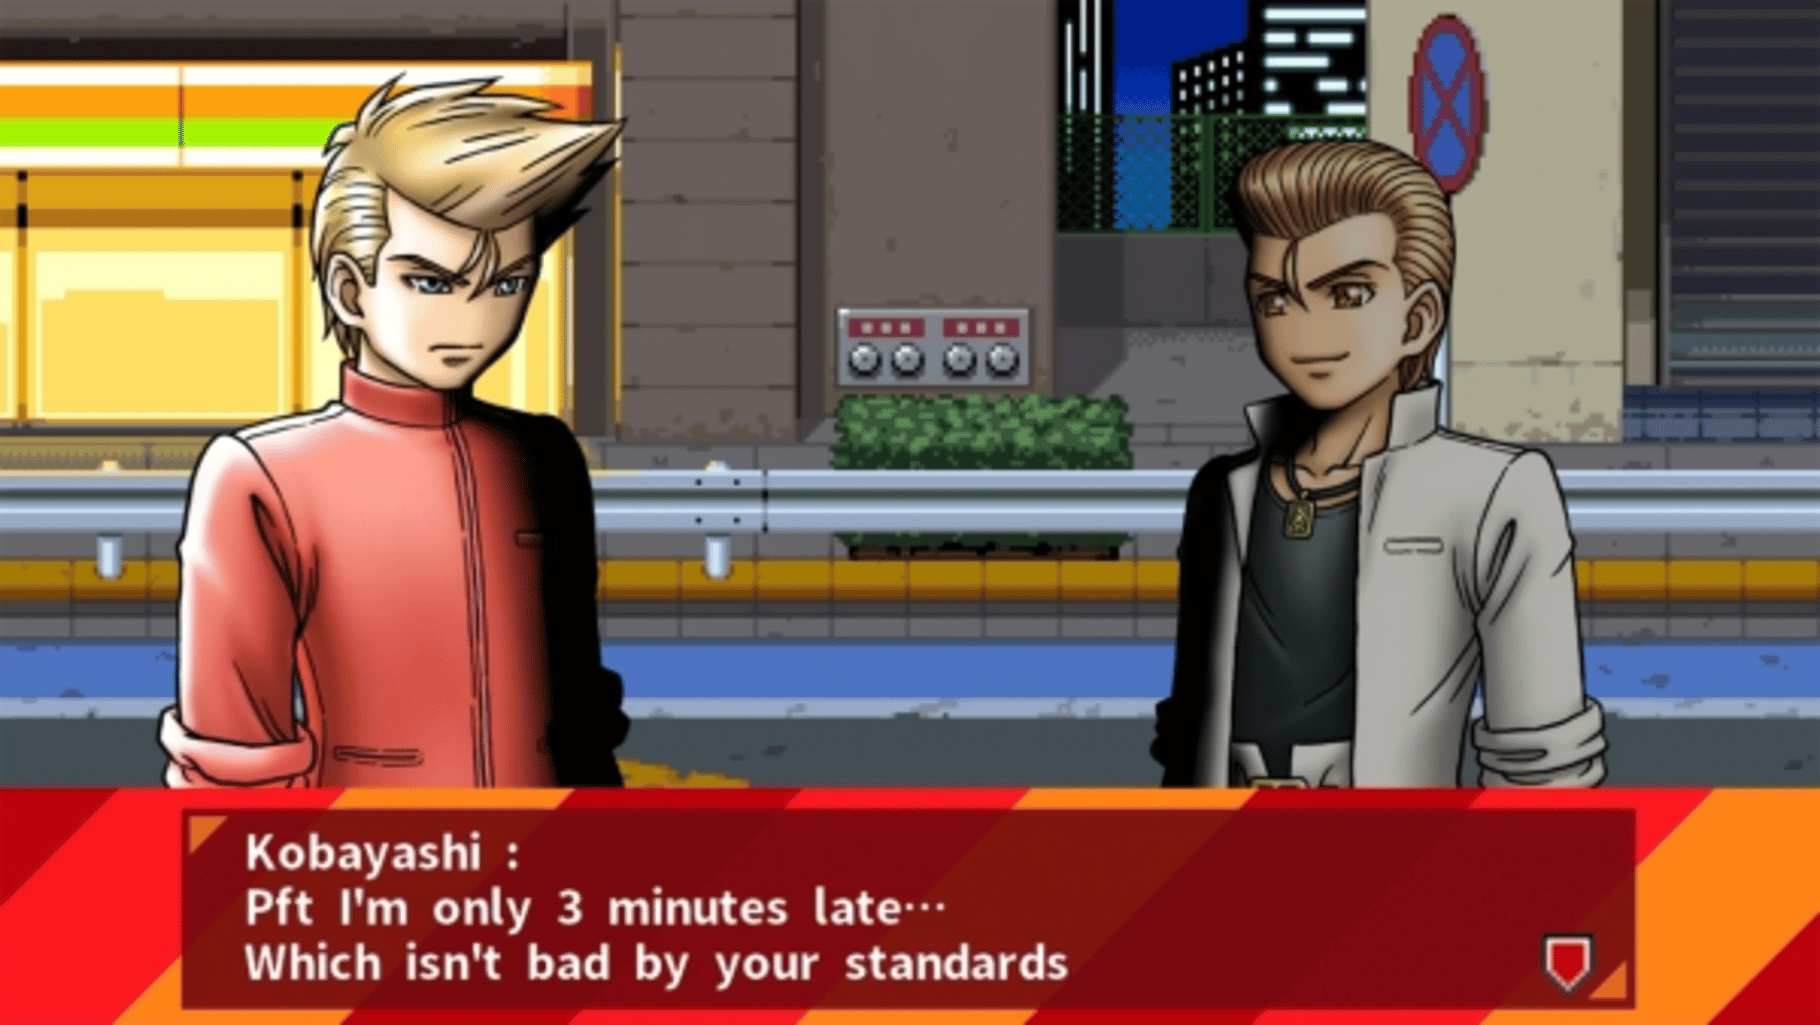 Stay Cool, Kobayashi-san!: A River City Ransom Story screenshot